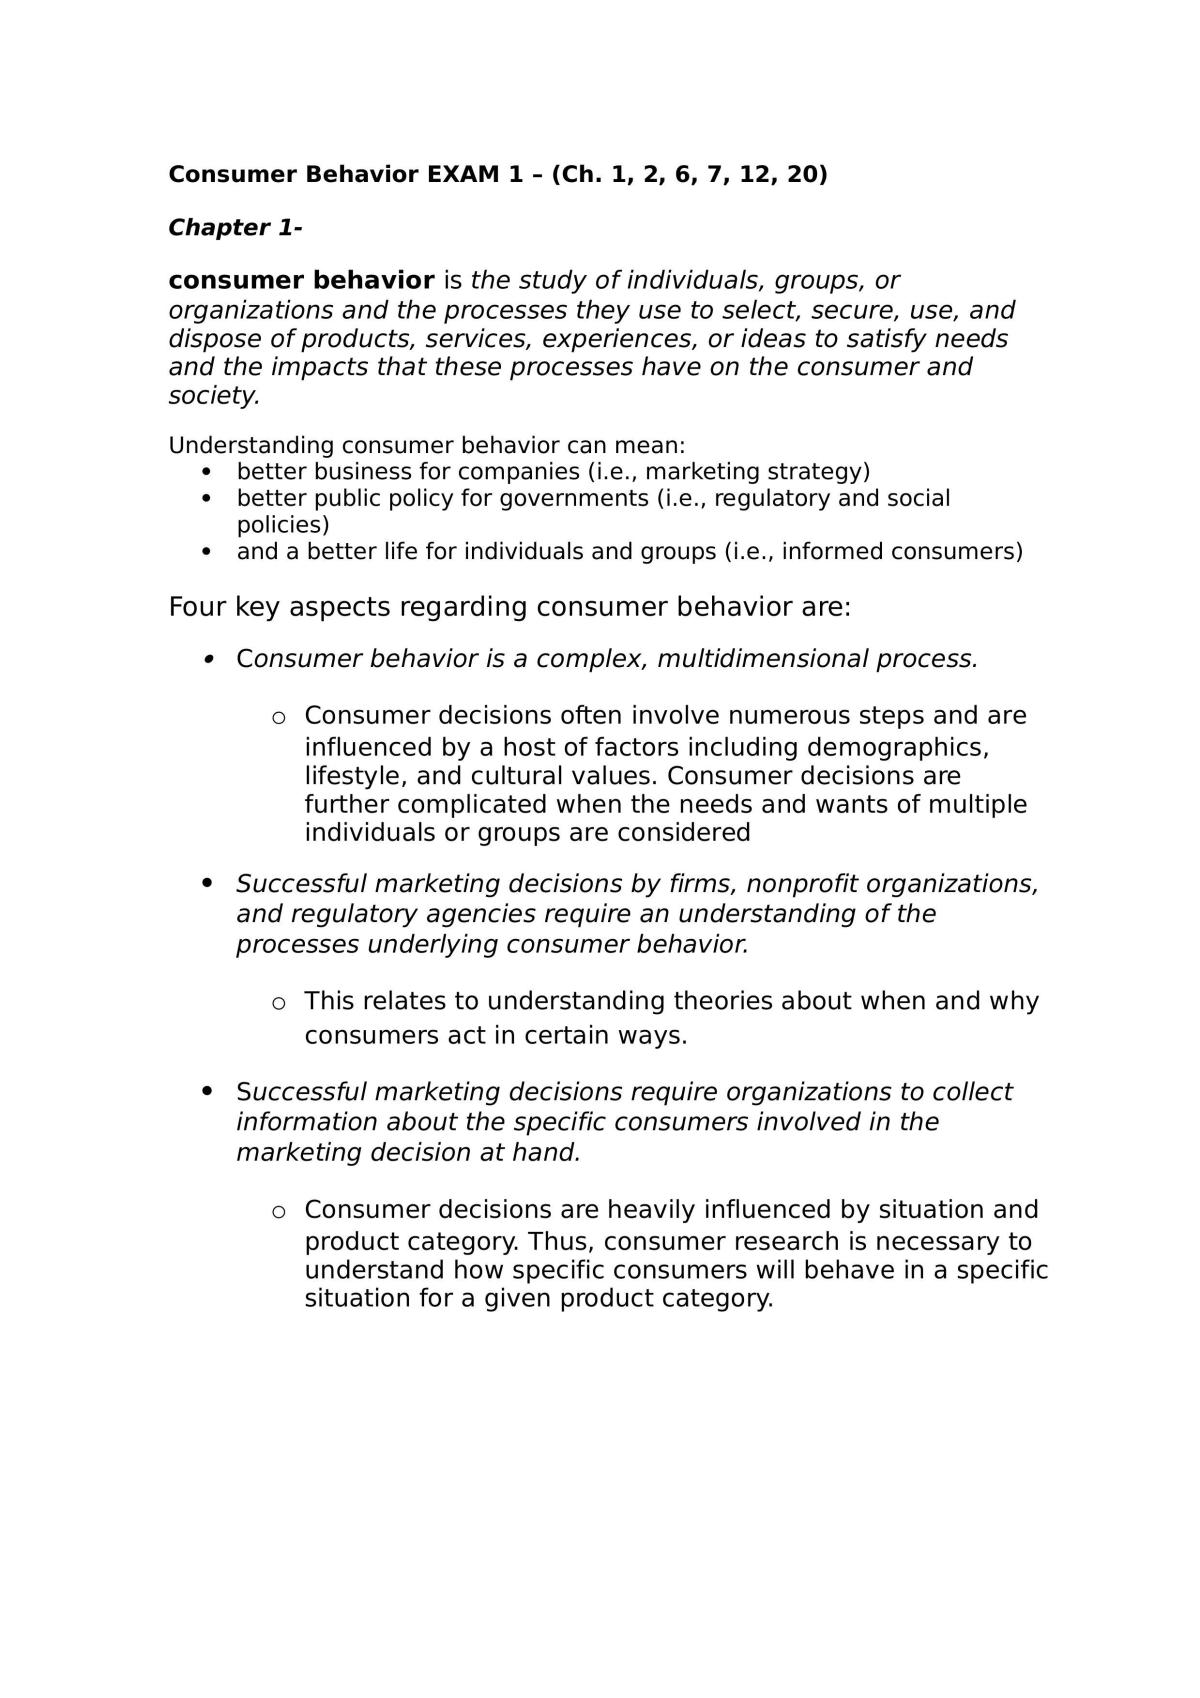 Consumer Behavior Exam 1 Notes - Page 1